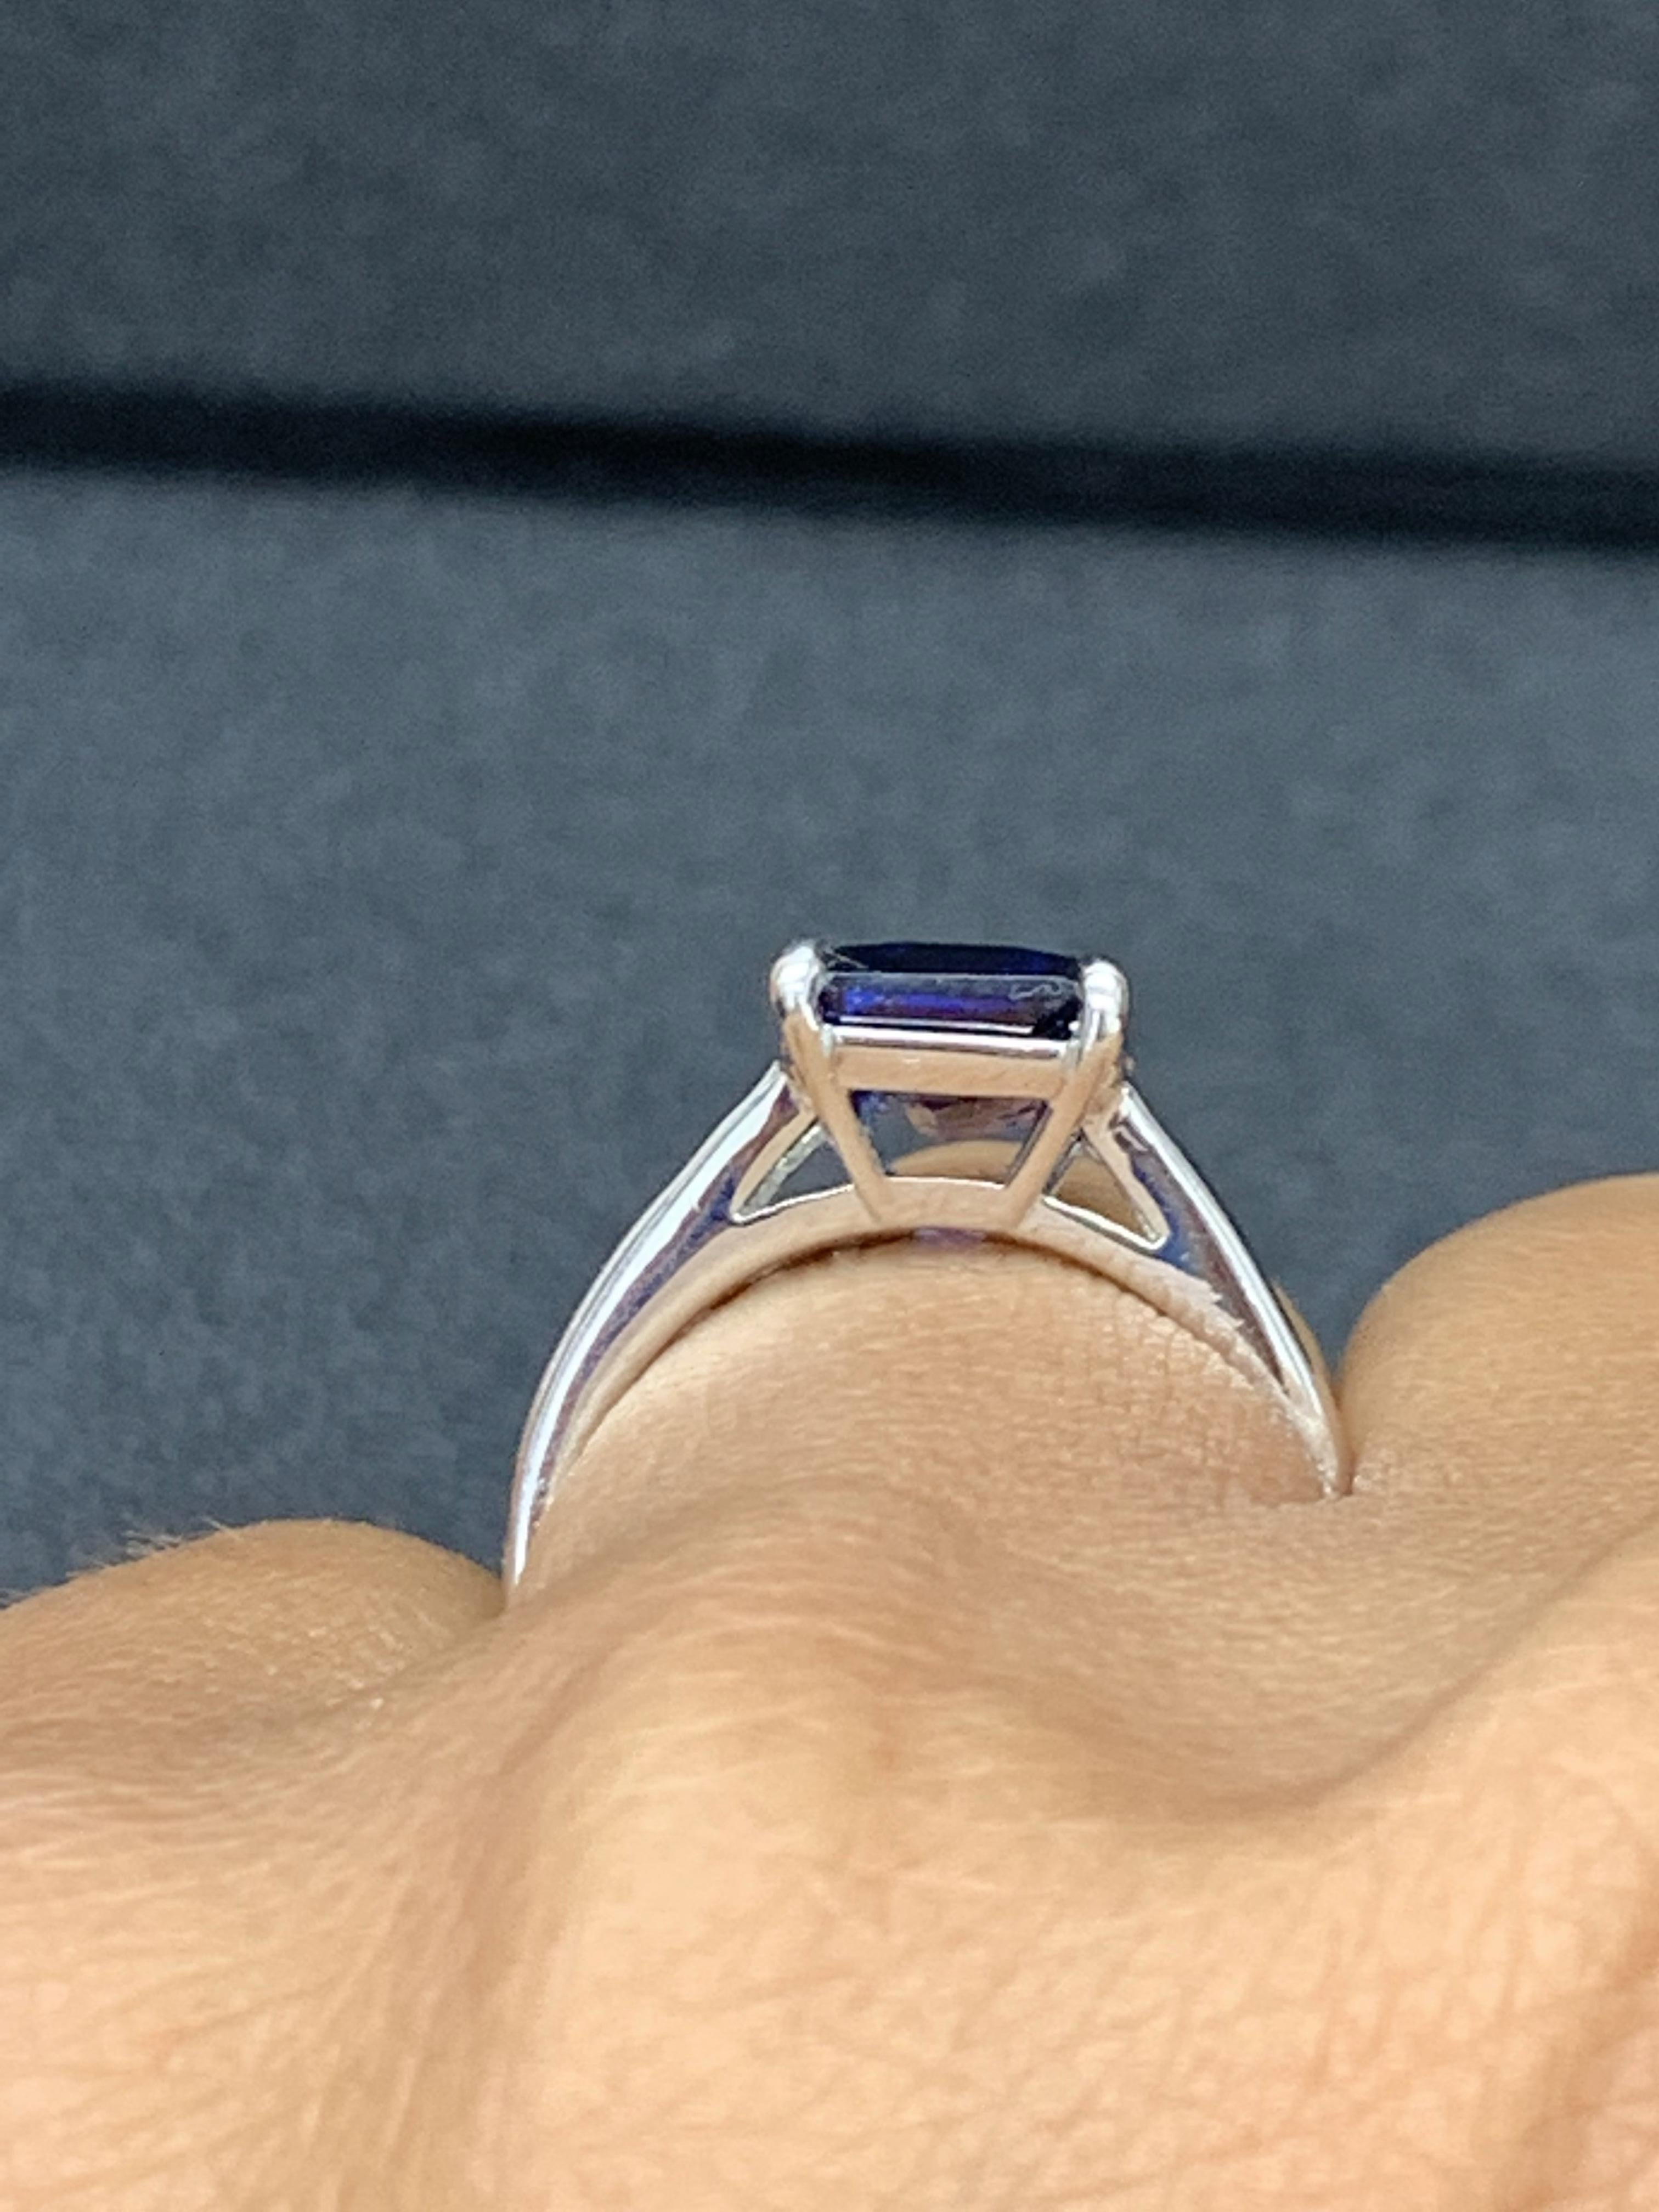 Women's Certified 5.13 Carat Emerald Cut Sapphire Diamond Engagement Ring in Platinum For Sale